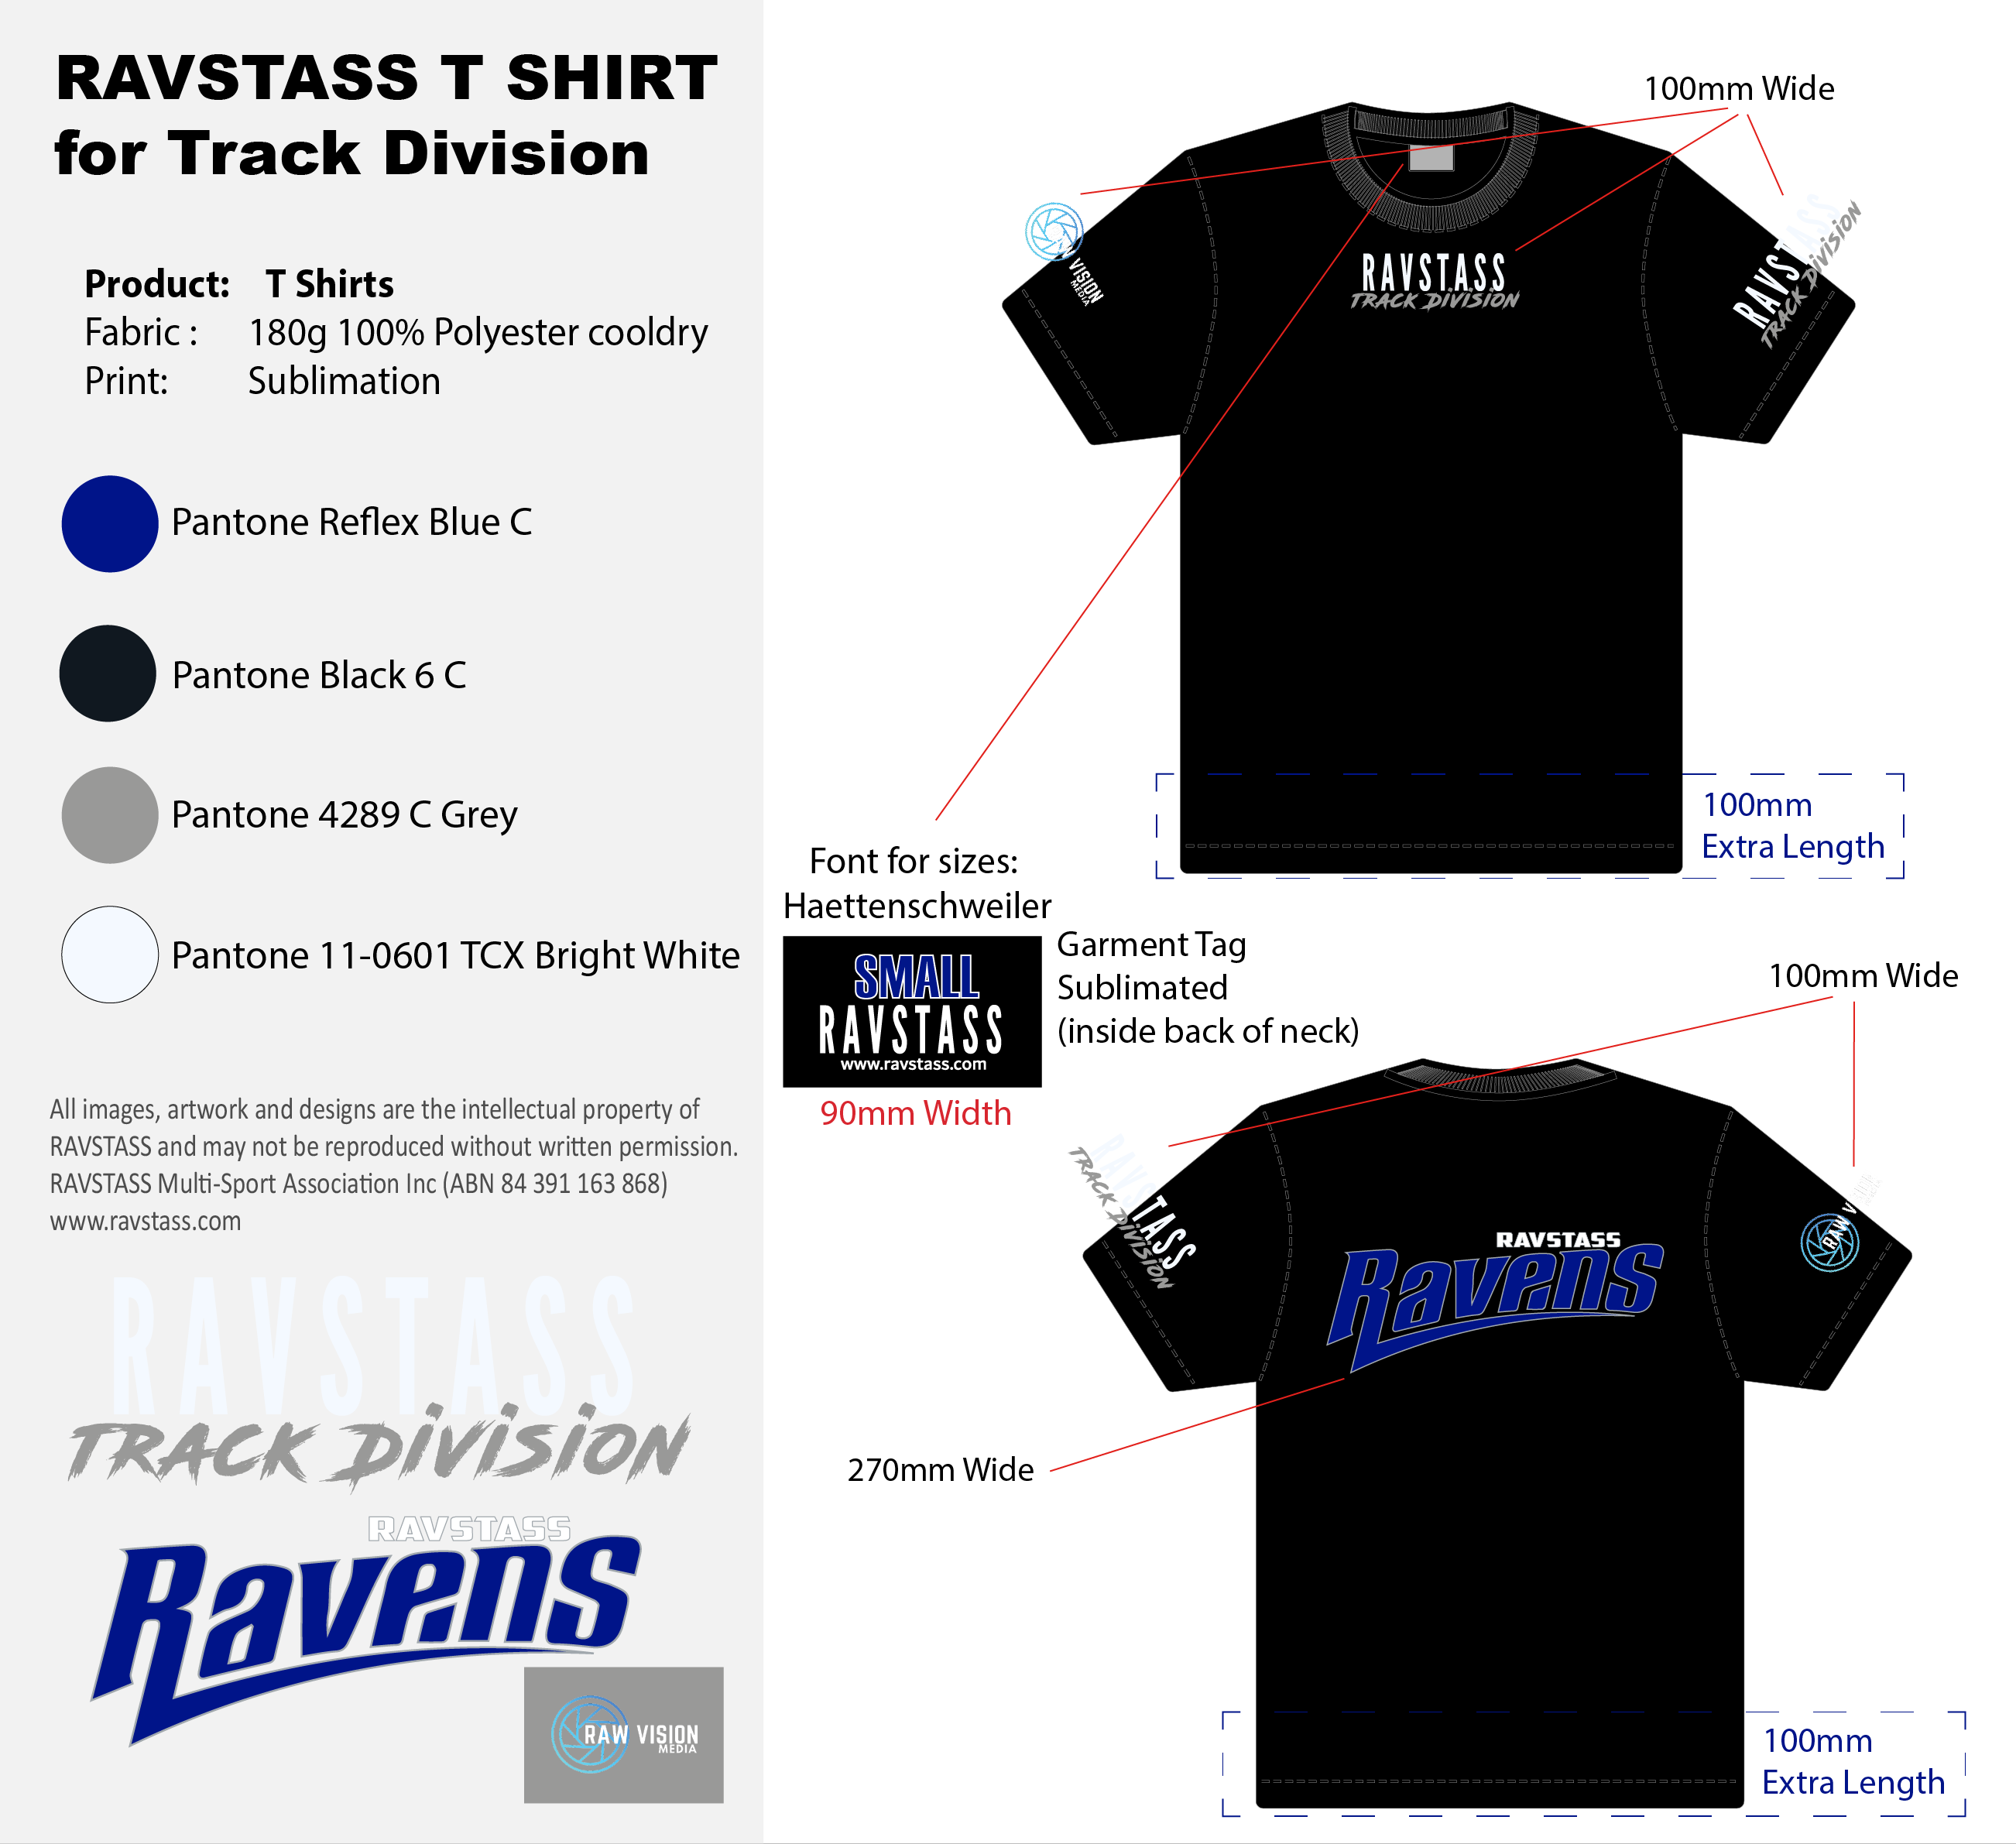 RAVSTASS Track Division Shirt